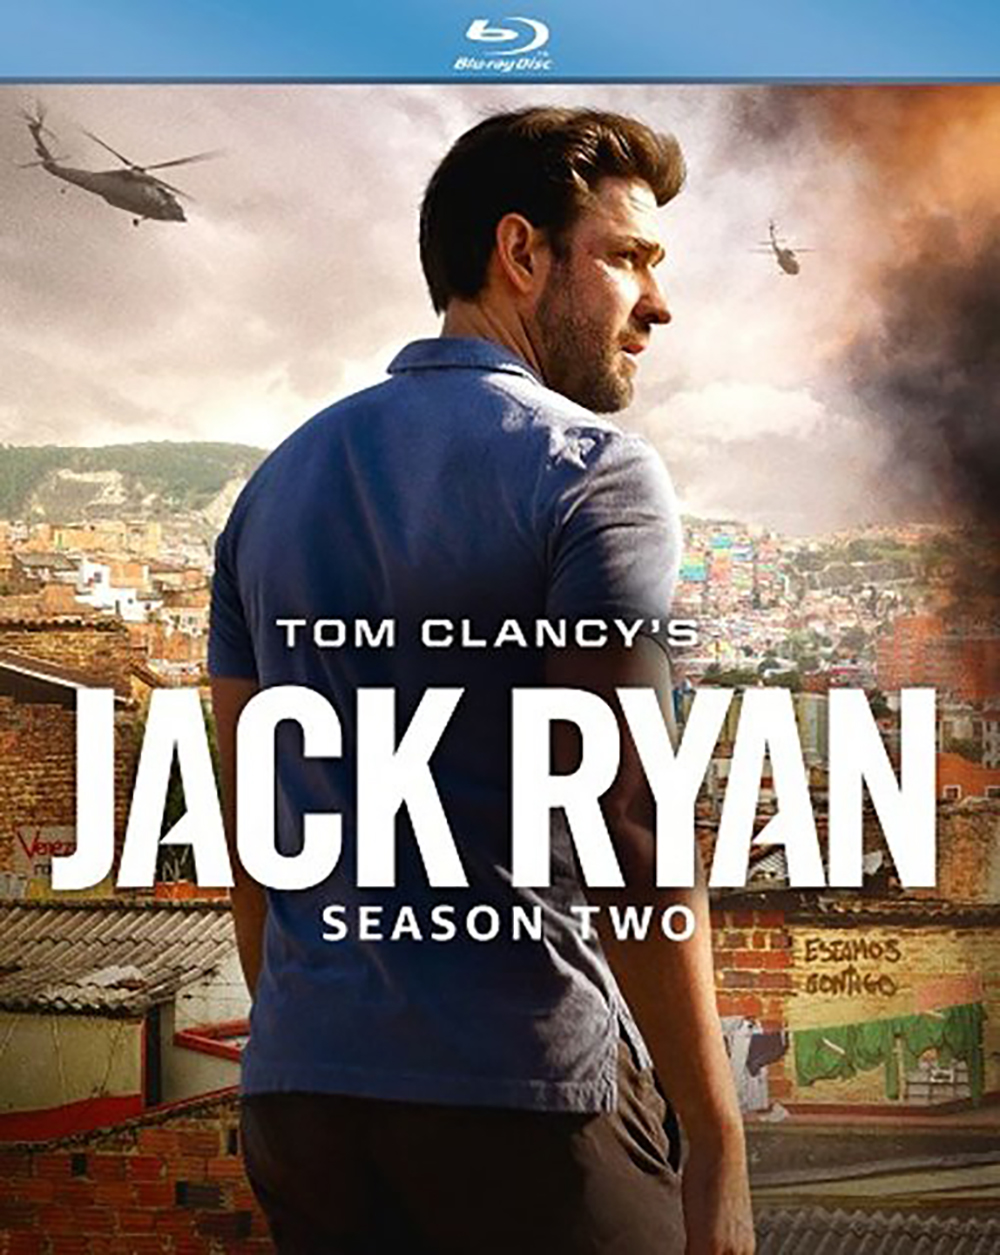 Tom Clancys Jack Ryan Season Two Blu Ray Review Flickdirect